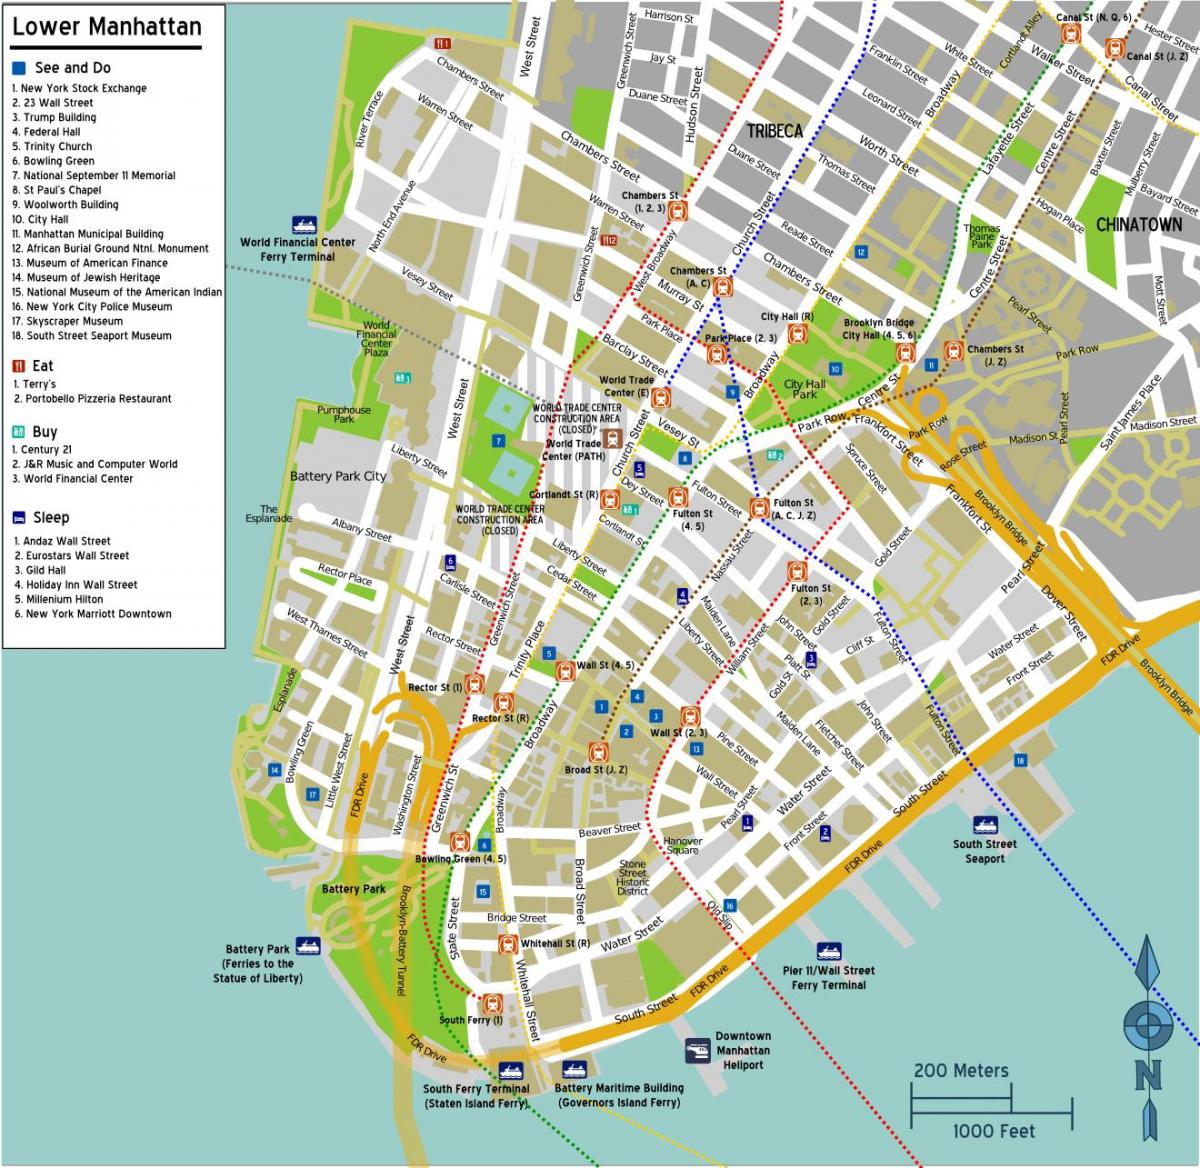 peta dari lower Manhattan dengan nama jalan